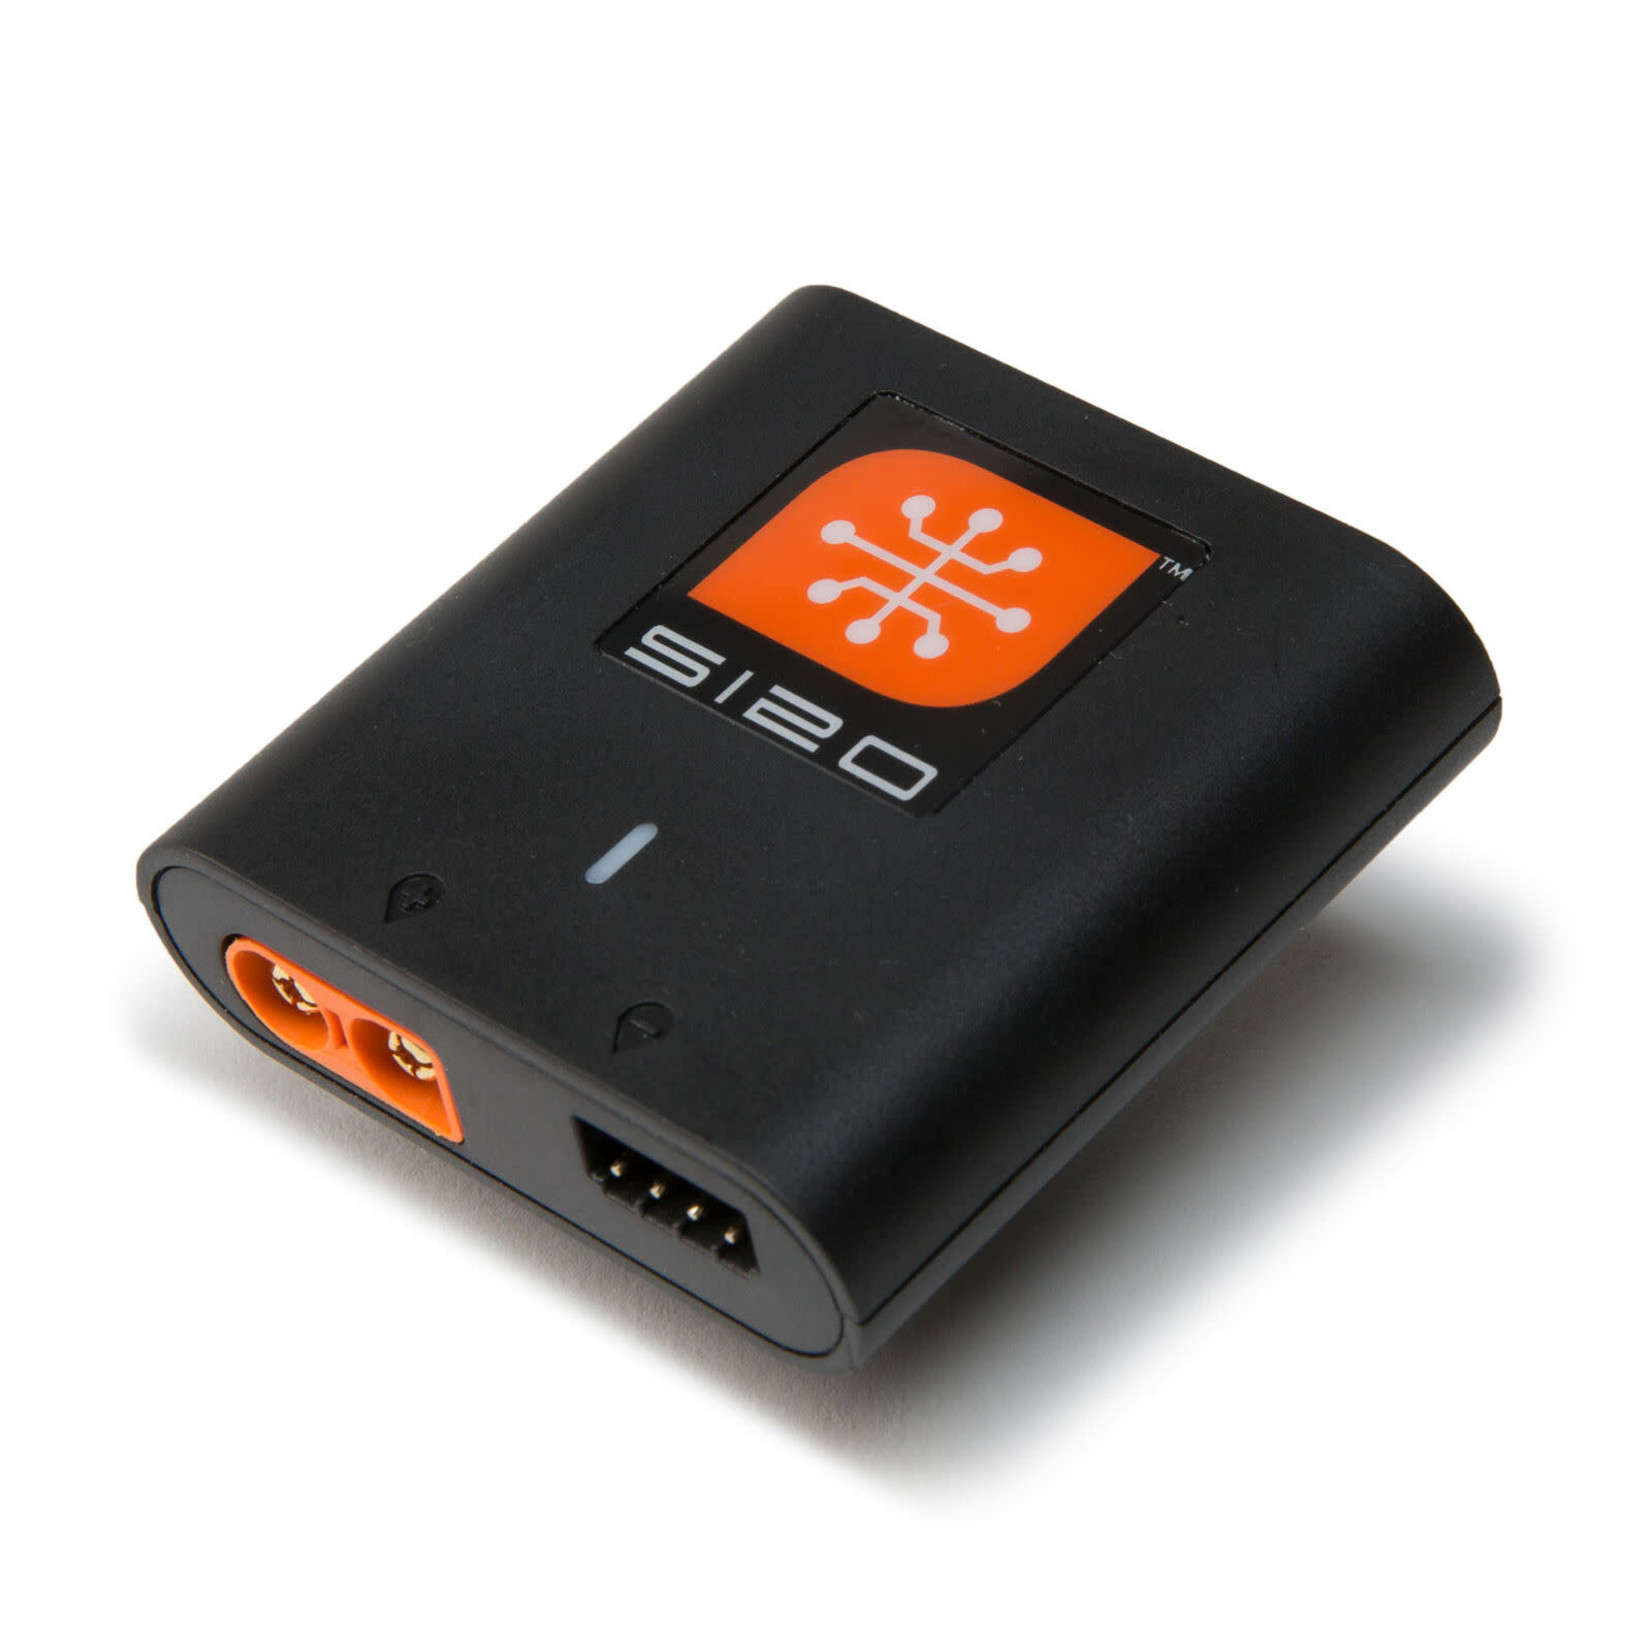 Spektrum Spektrum RC S120 USB-C Smart Charger (3S/20W) #SPMXC1020